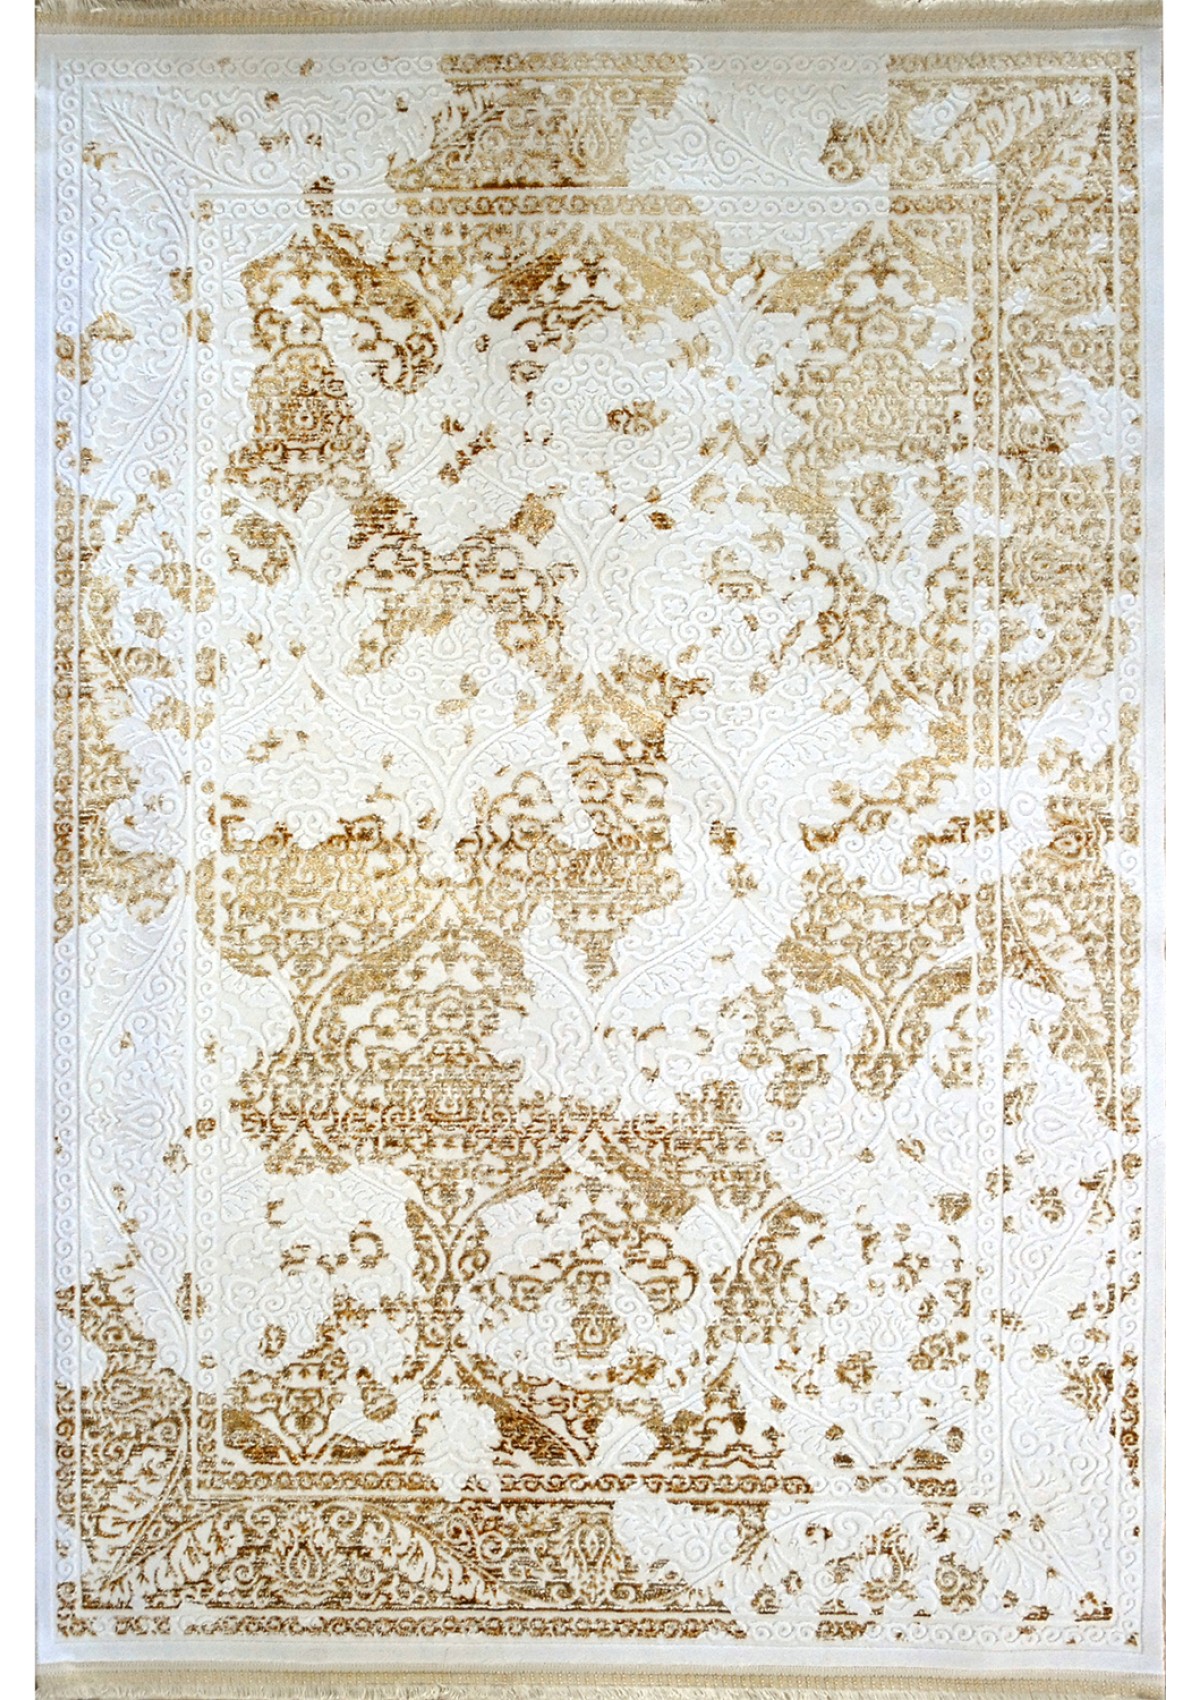 Nuance 1528 c.ivory/gold